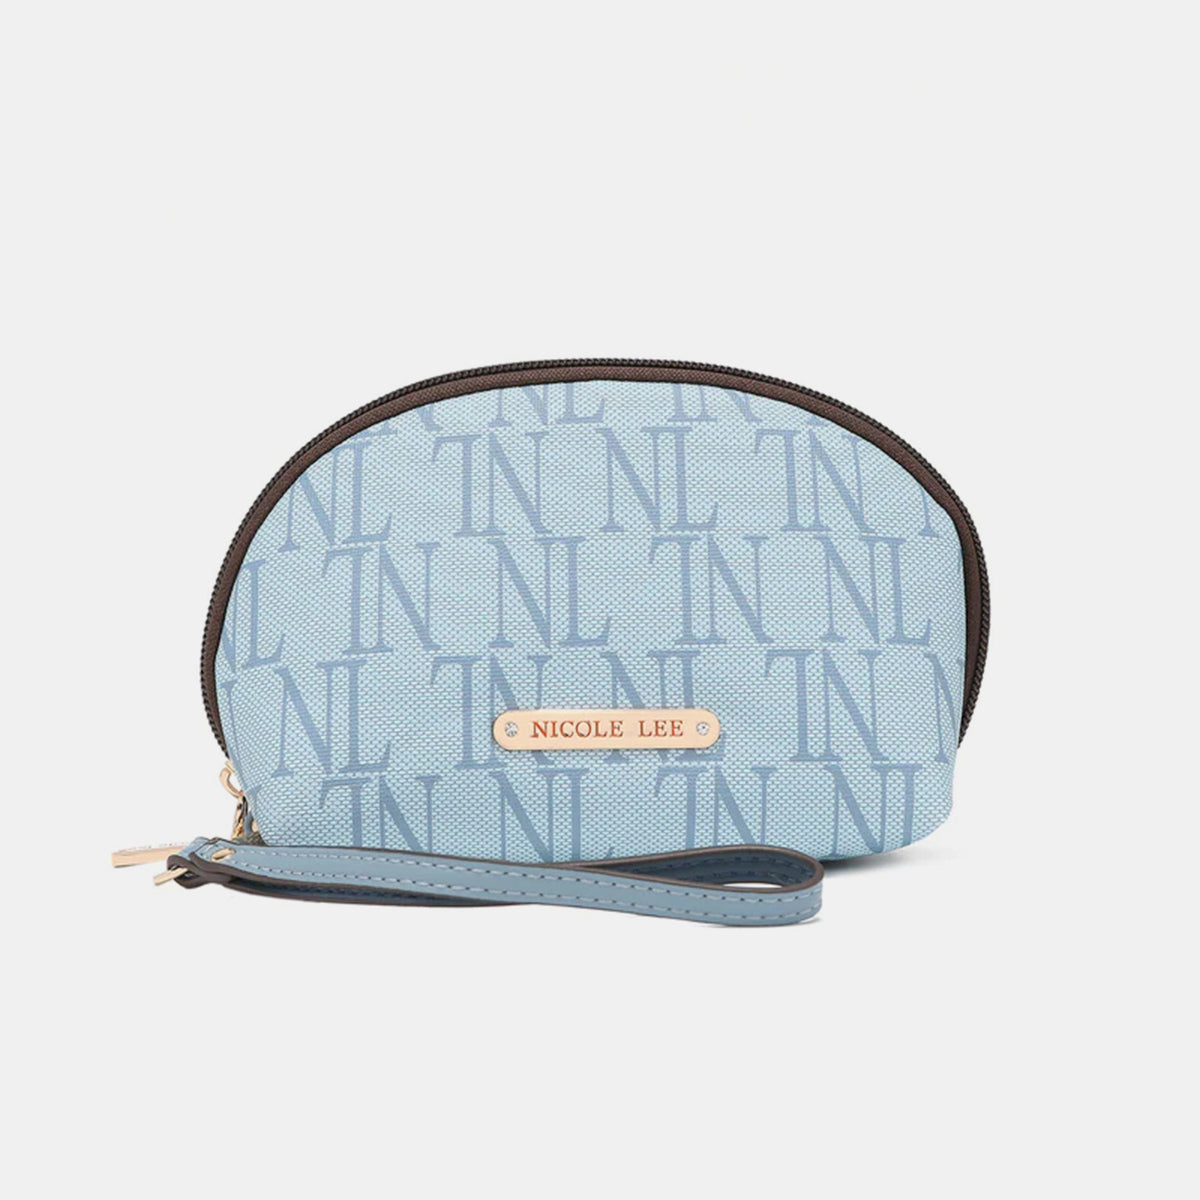 Nicole Lee USA 3-Piece Letter Print Texture Handbag Set apparels & accessories